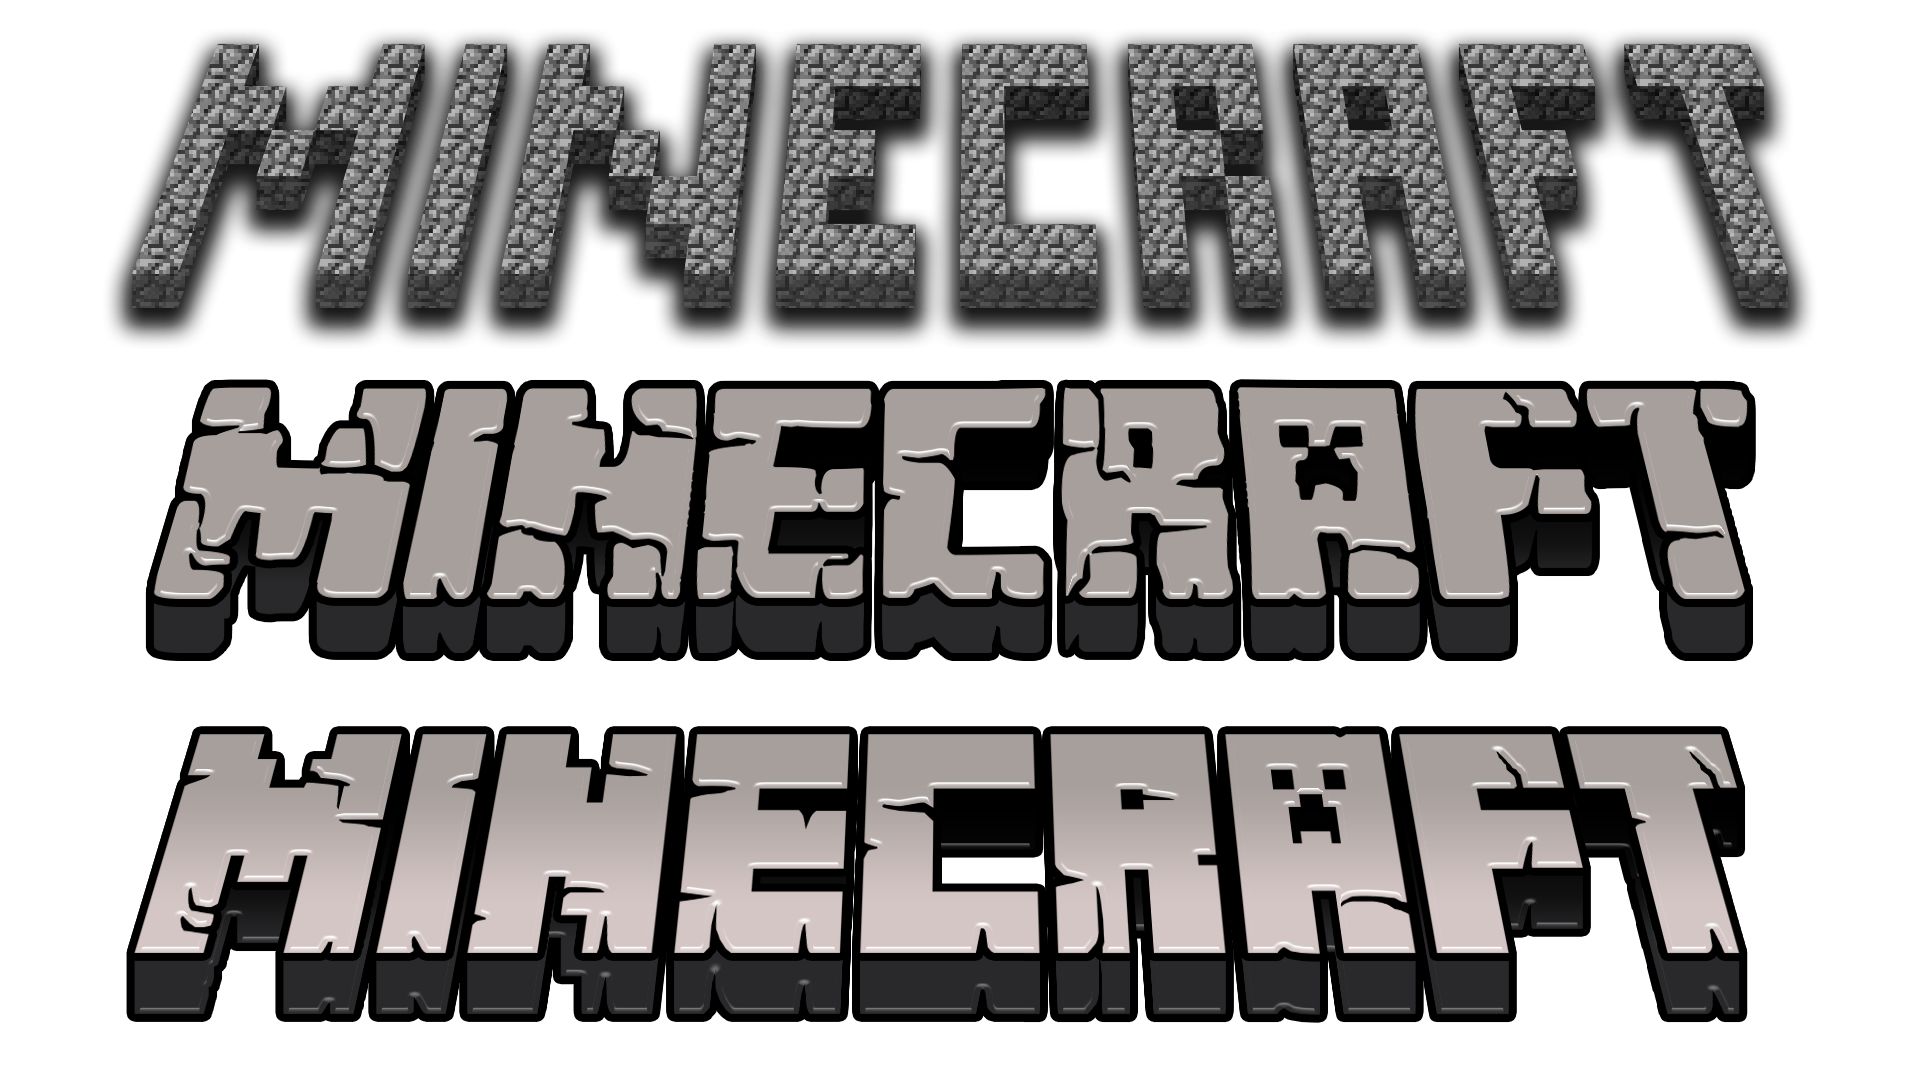 Minecraft logo png. Майнкрафт. Minecraft logo. Надписи в МАЙНКРАФТЕ. Майнкрафт логотип картинки.